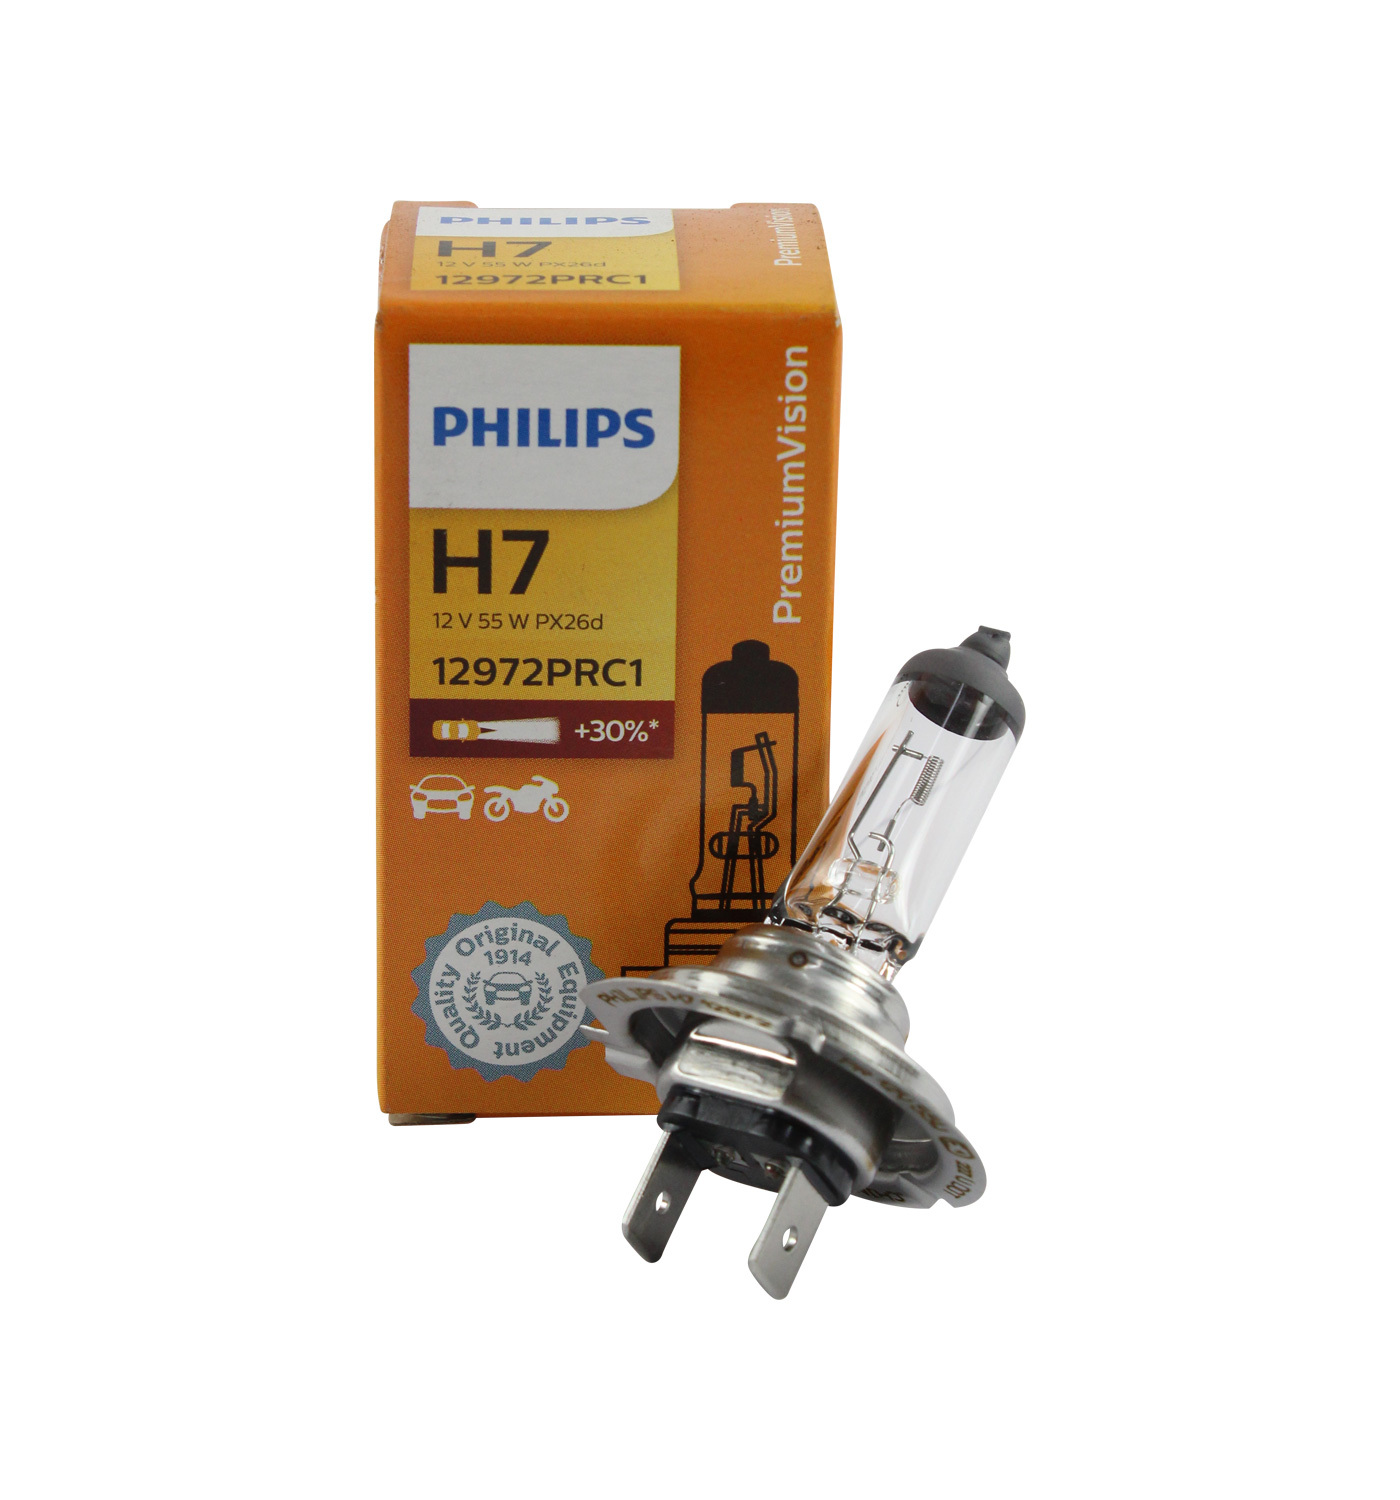 Philips H7 12V 55W PX26d Premium Vision Standard Car Headlight